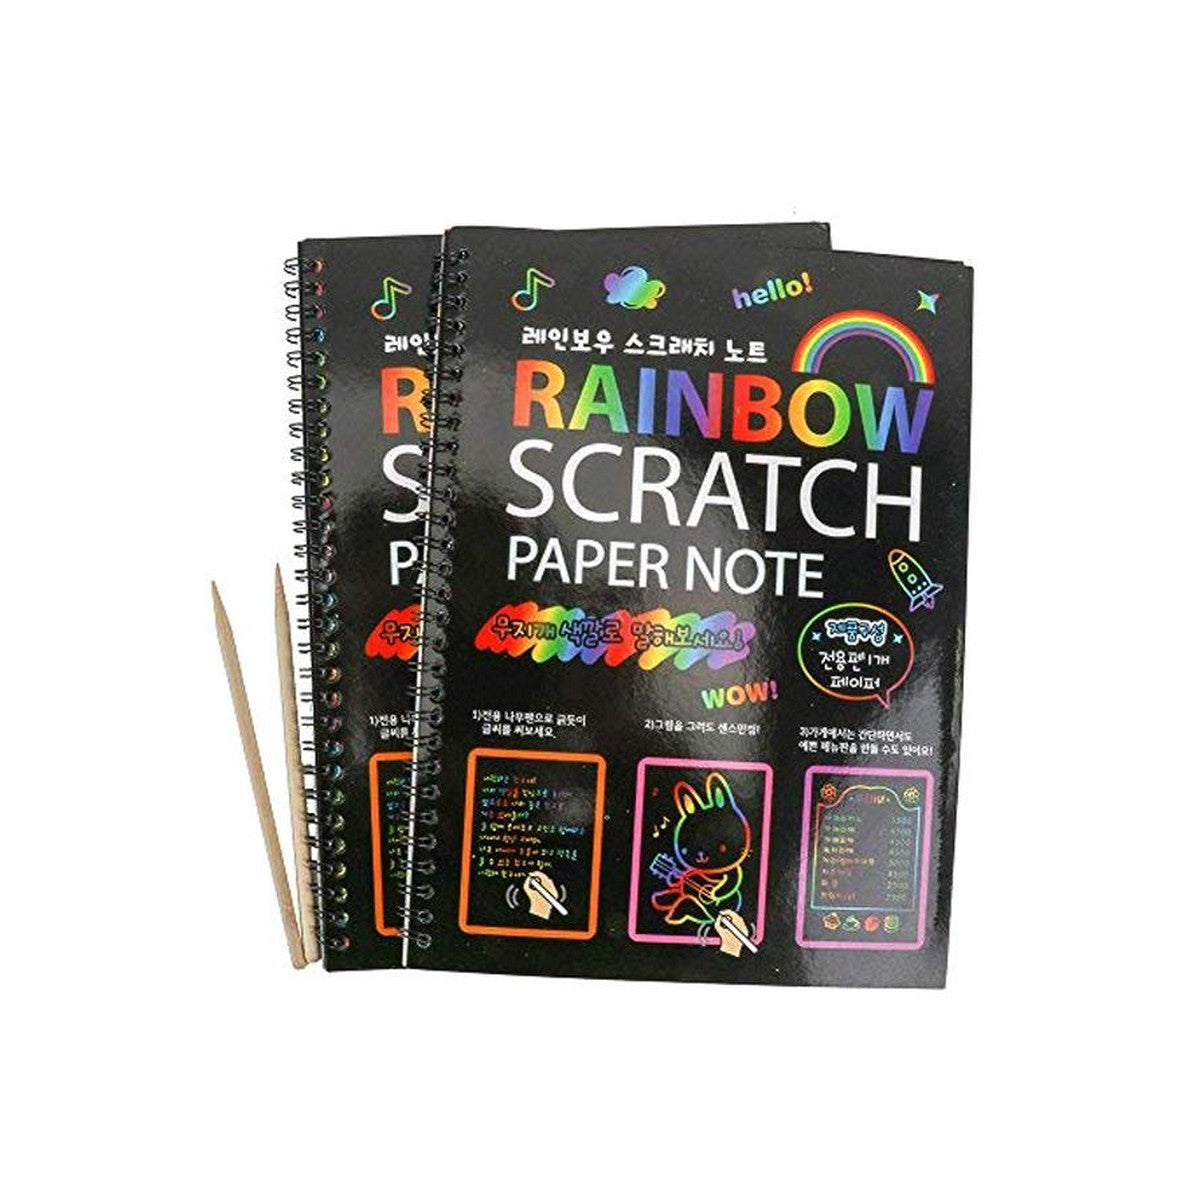 Rainbow scratch Paper Note In Pakistan